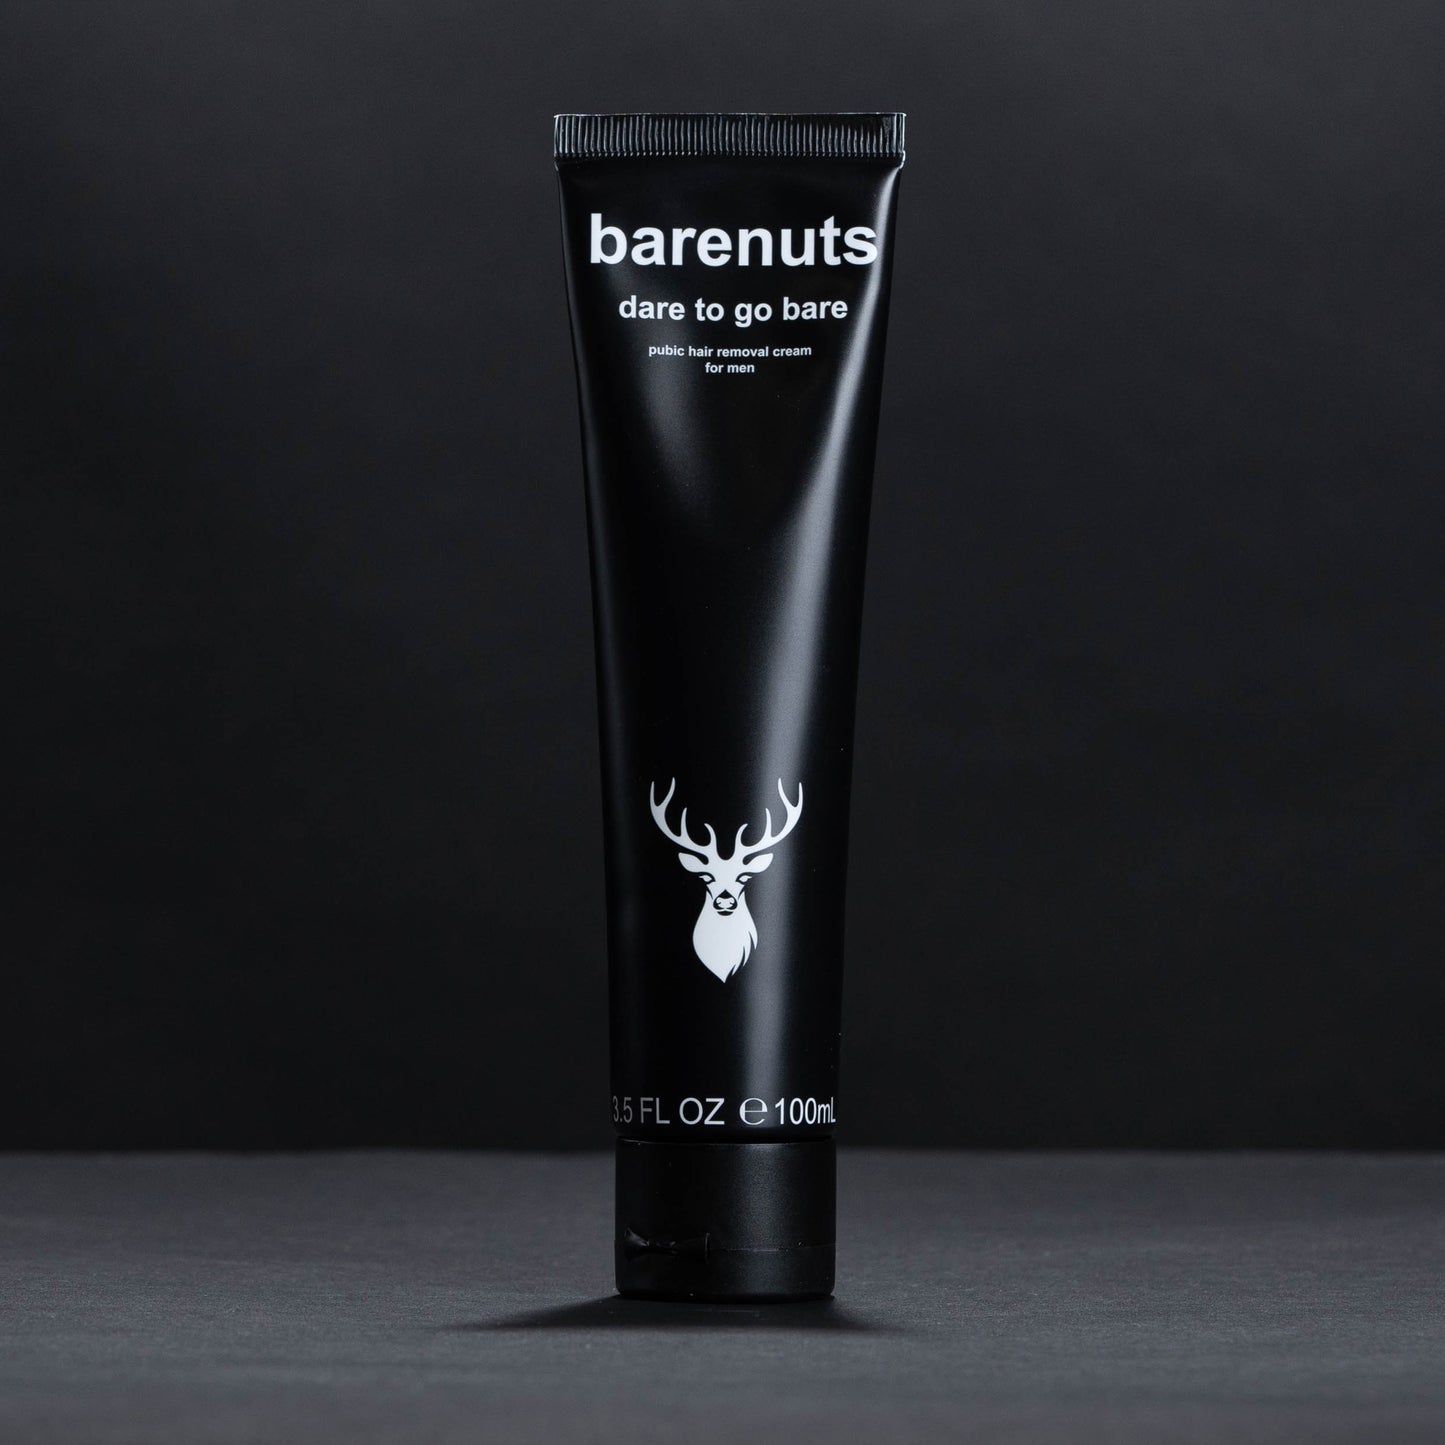 barenuts hair removal cream for men